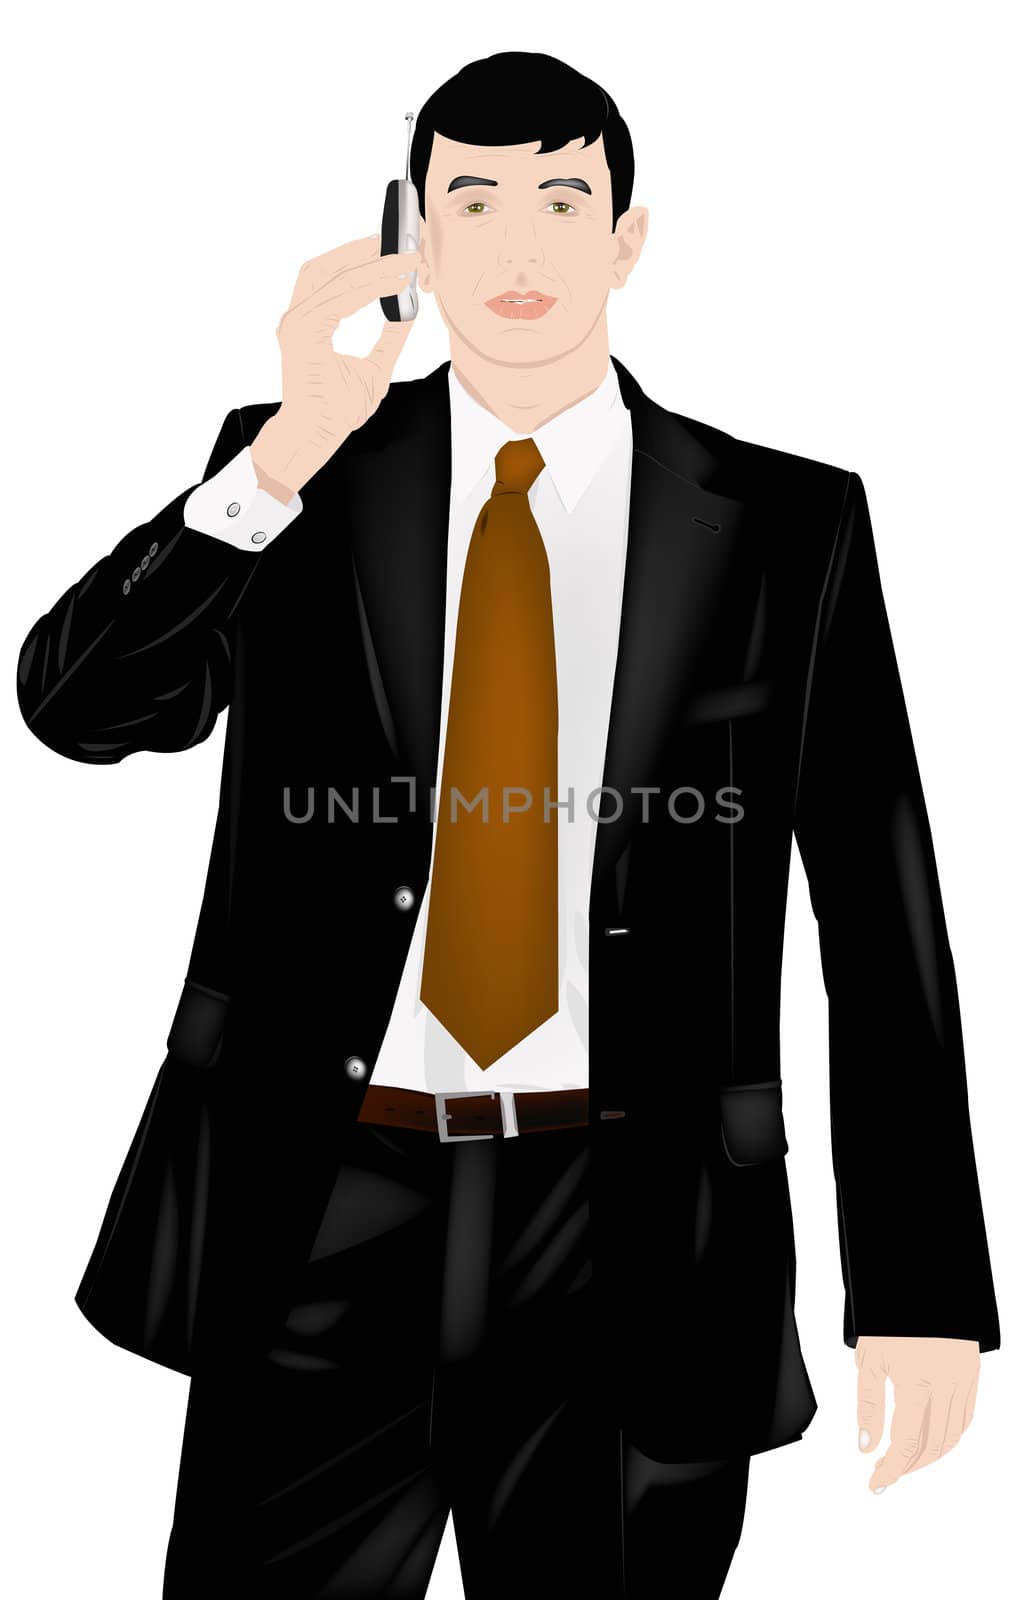 The businessman by sergey150770SV